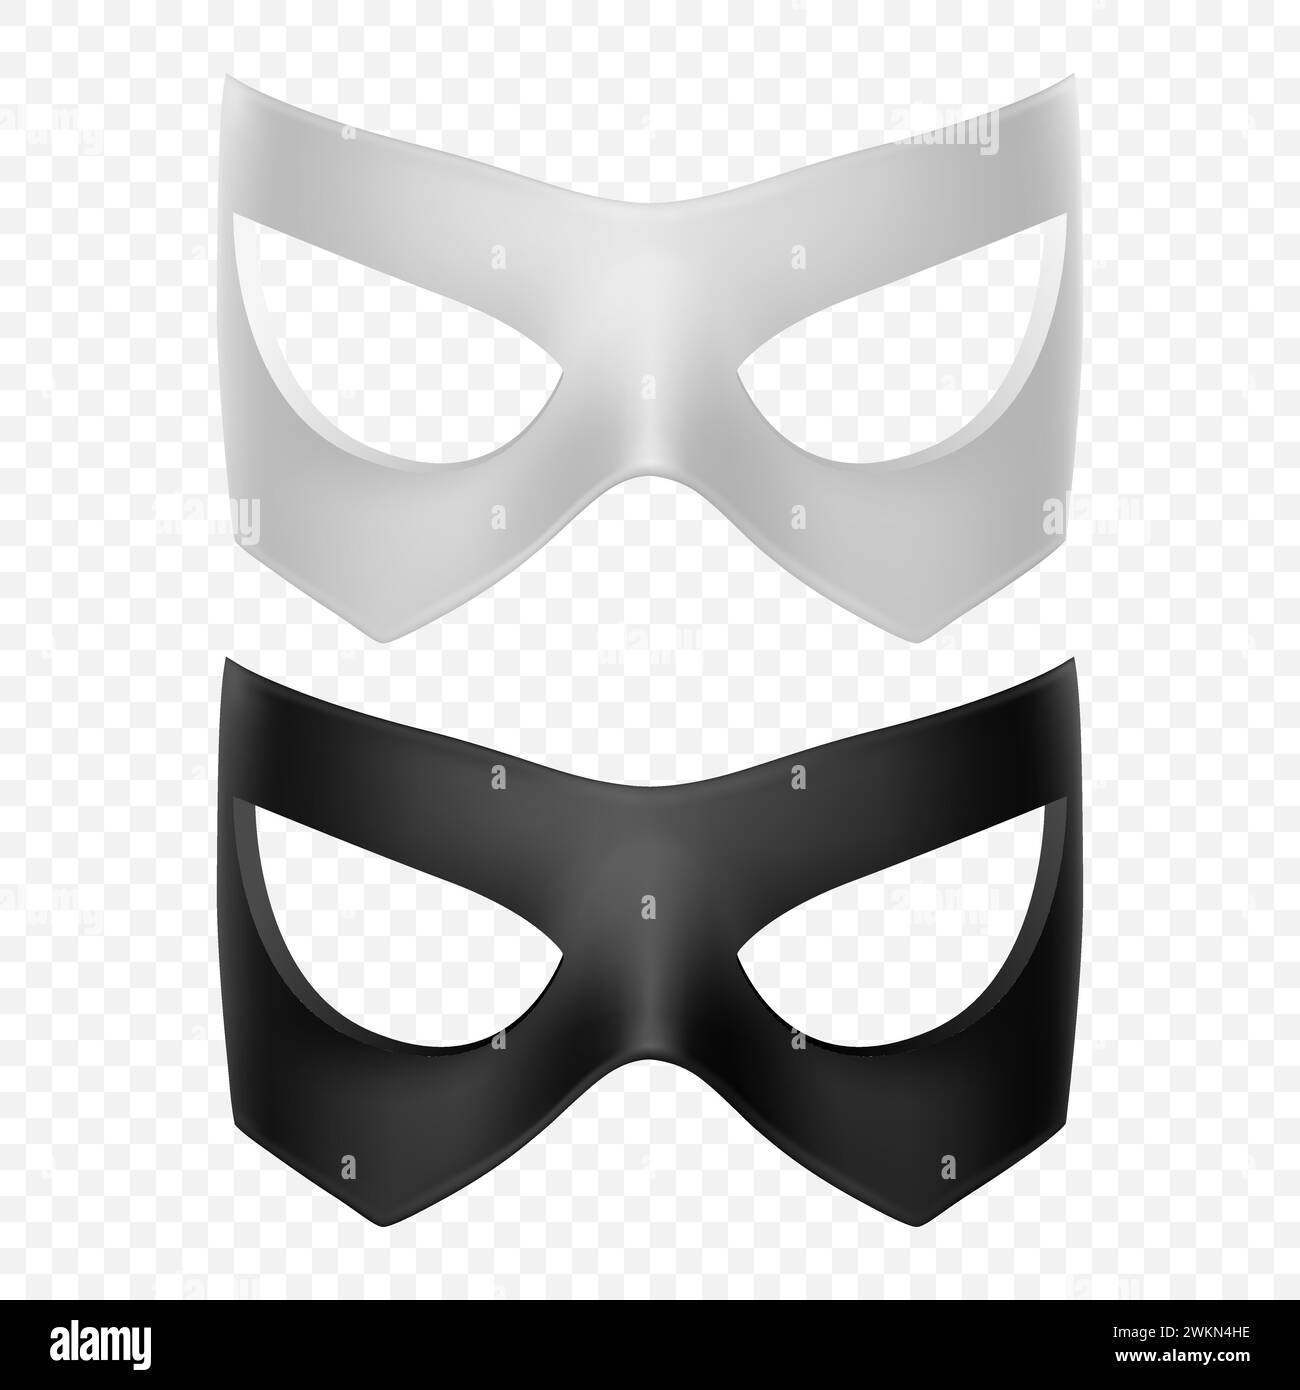 Vector White and Black Super Hero Mask Set. Face Character, Superhero Comic Book Mask Closeup. Superhero Photo Prop, Carnival Face Mask, Glasses Stock Vector